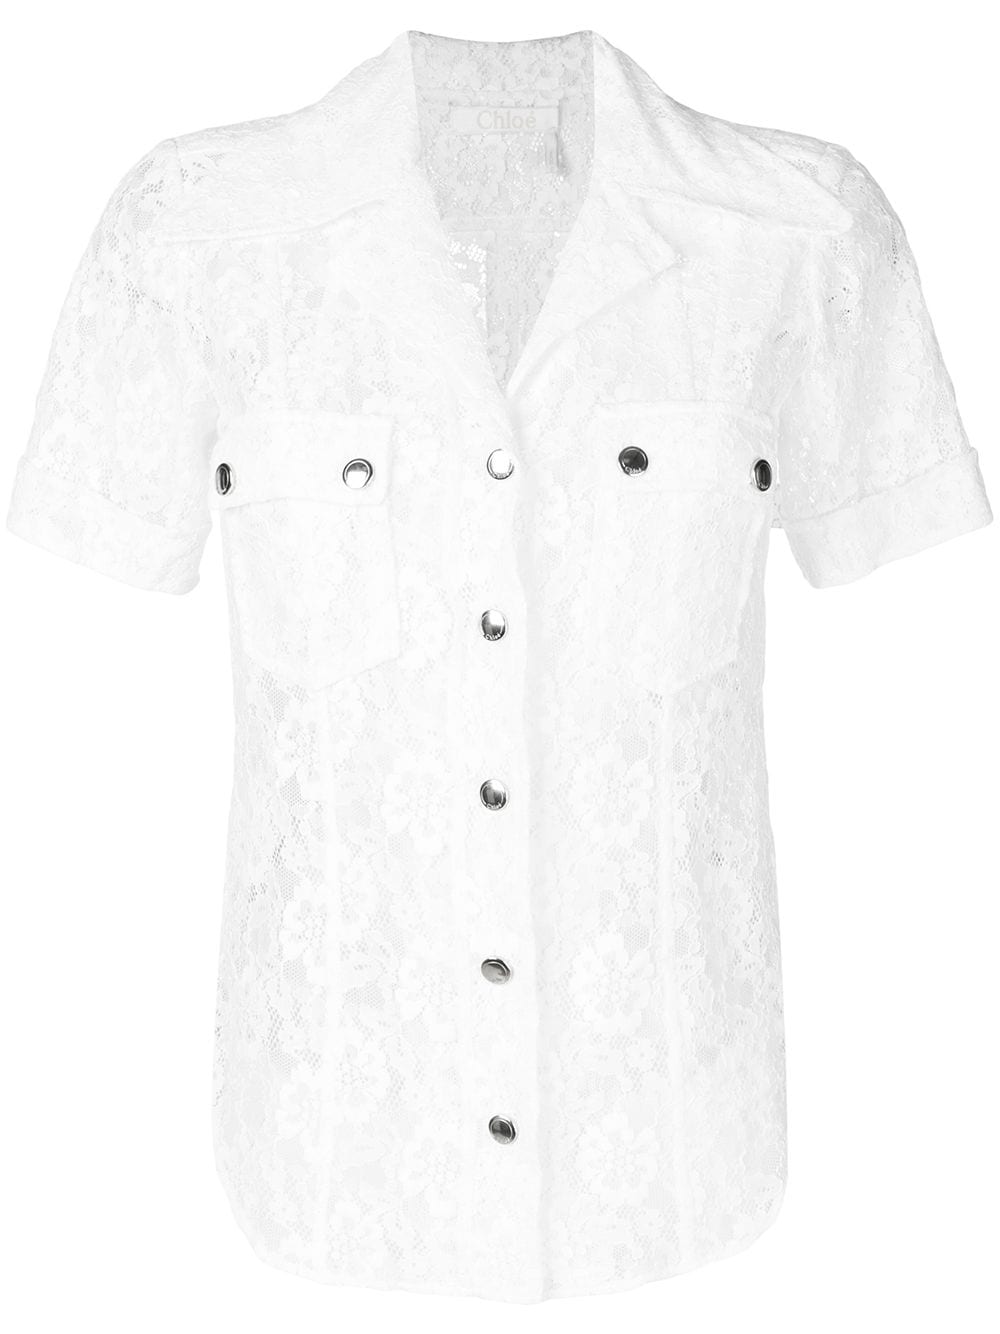 CHLOÉ lace short sleeve shirt,CHC18UHT4541312953731